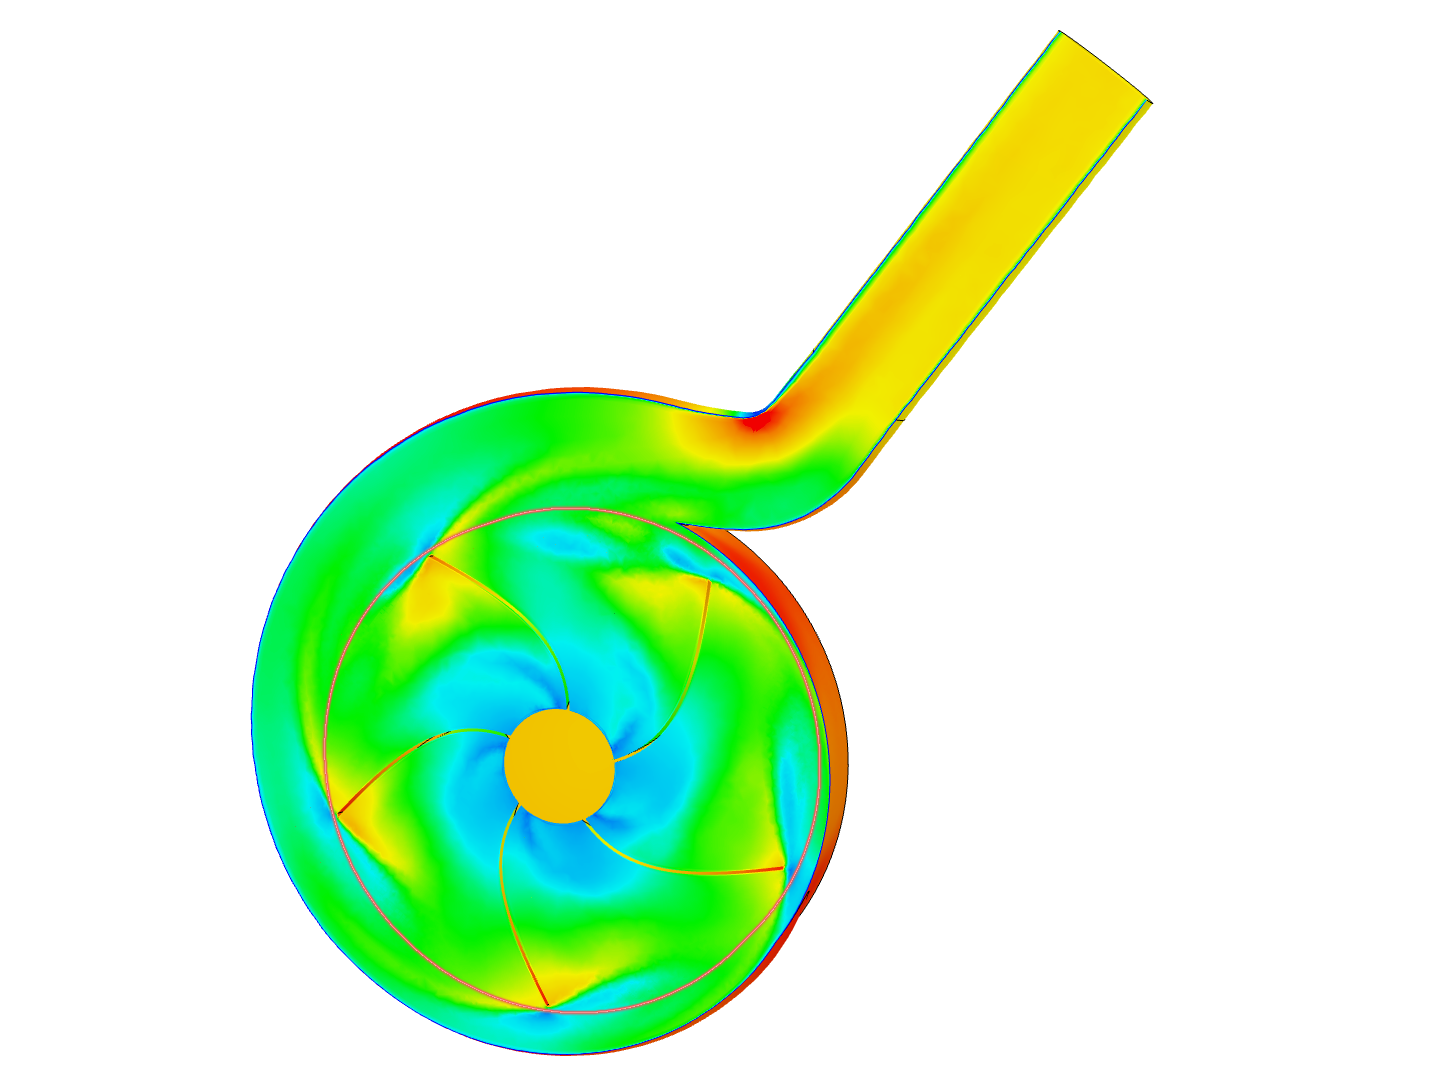 Centrifugal pump/Turbocharger image